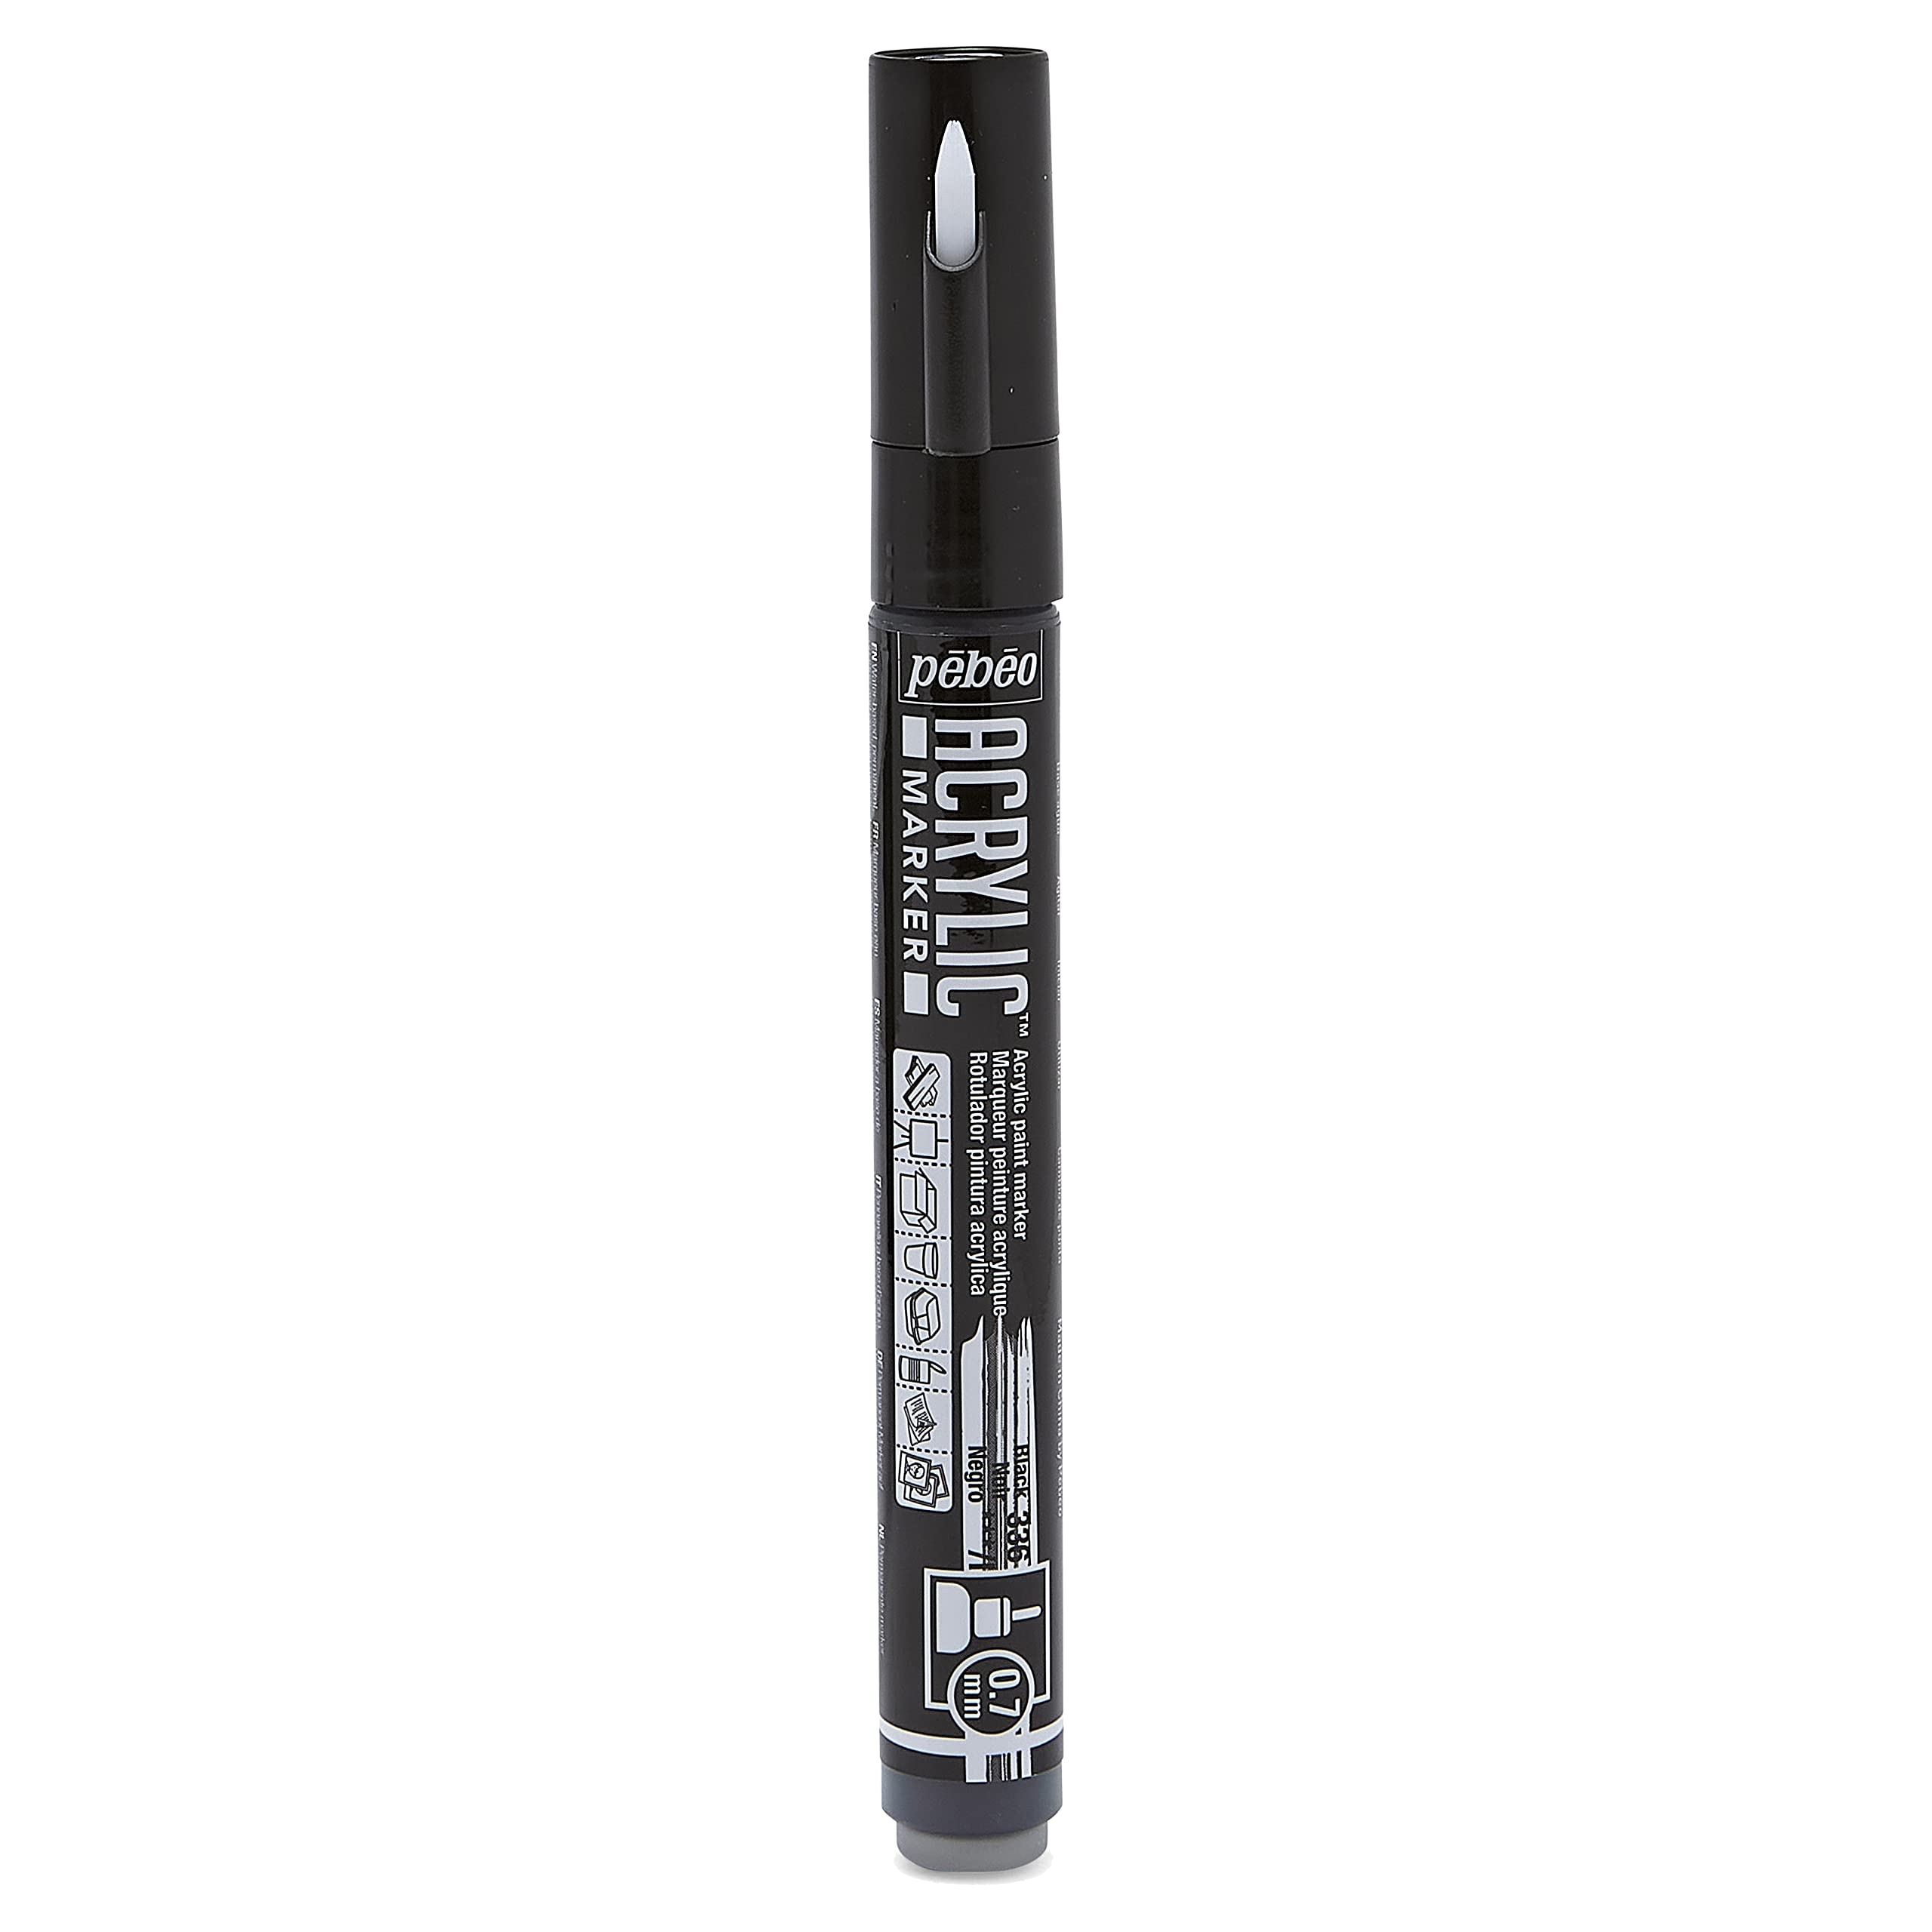 Pebeo Drawing Gum Marker Pen Artist Masking Fluid Medium for